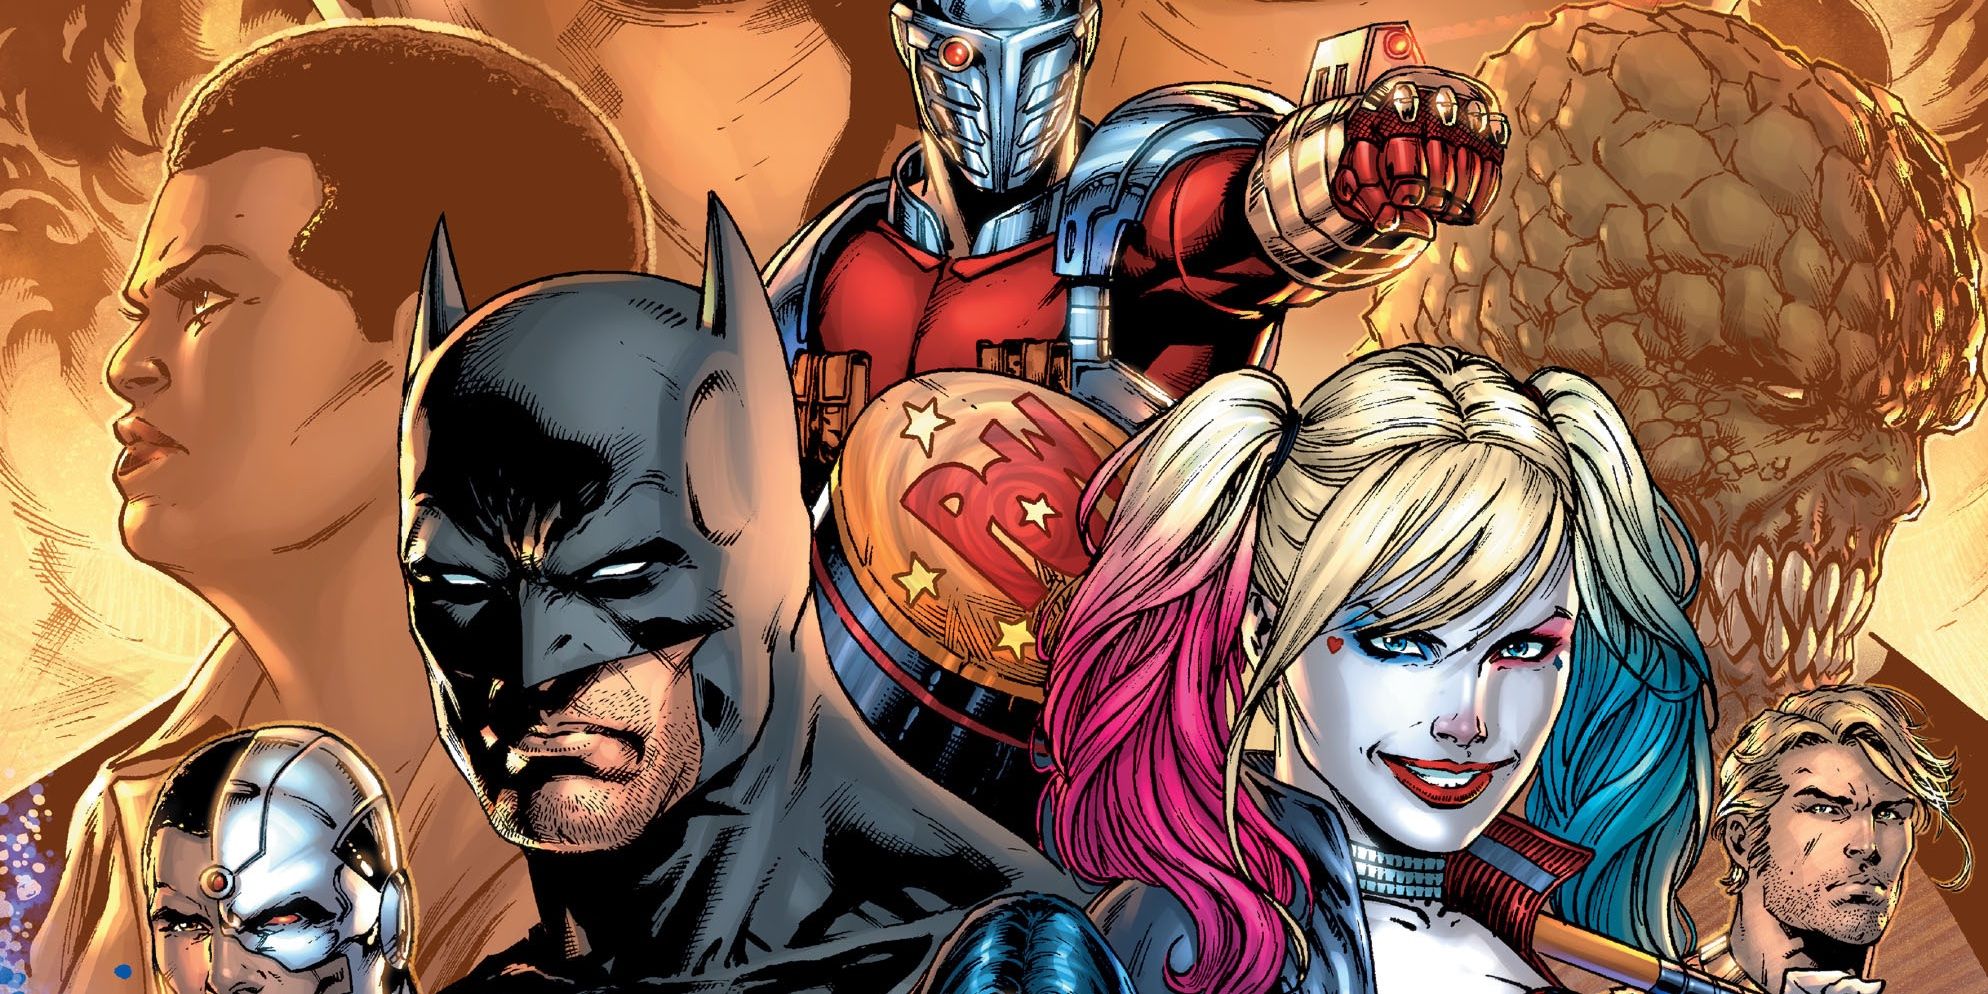 Cover artwork for Justice league VS Suicide Squad crossover comic